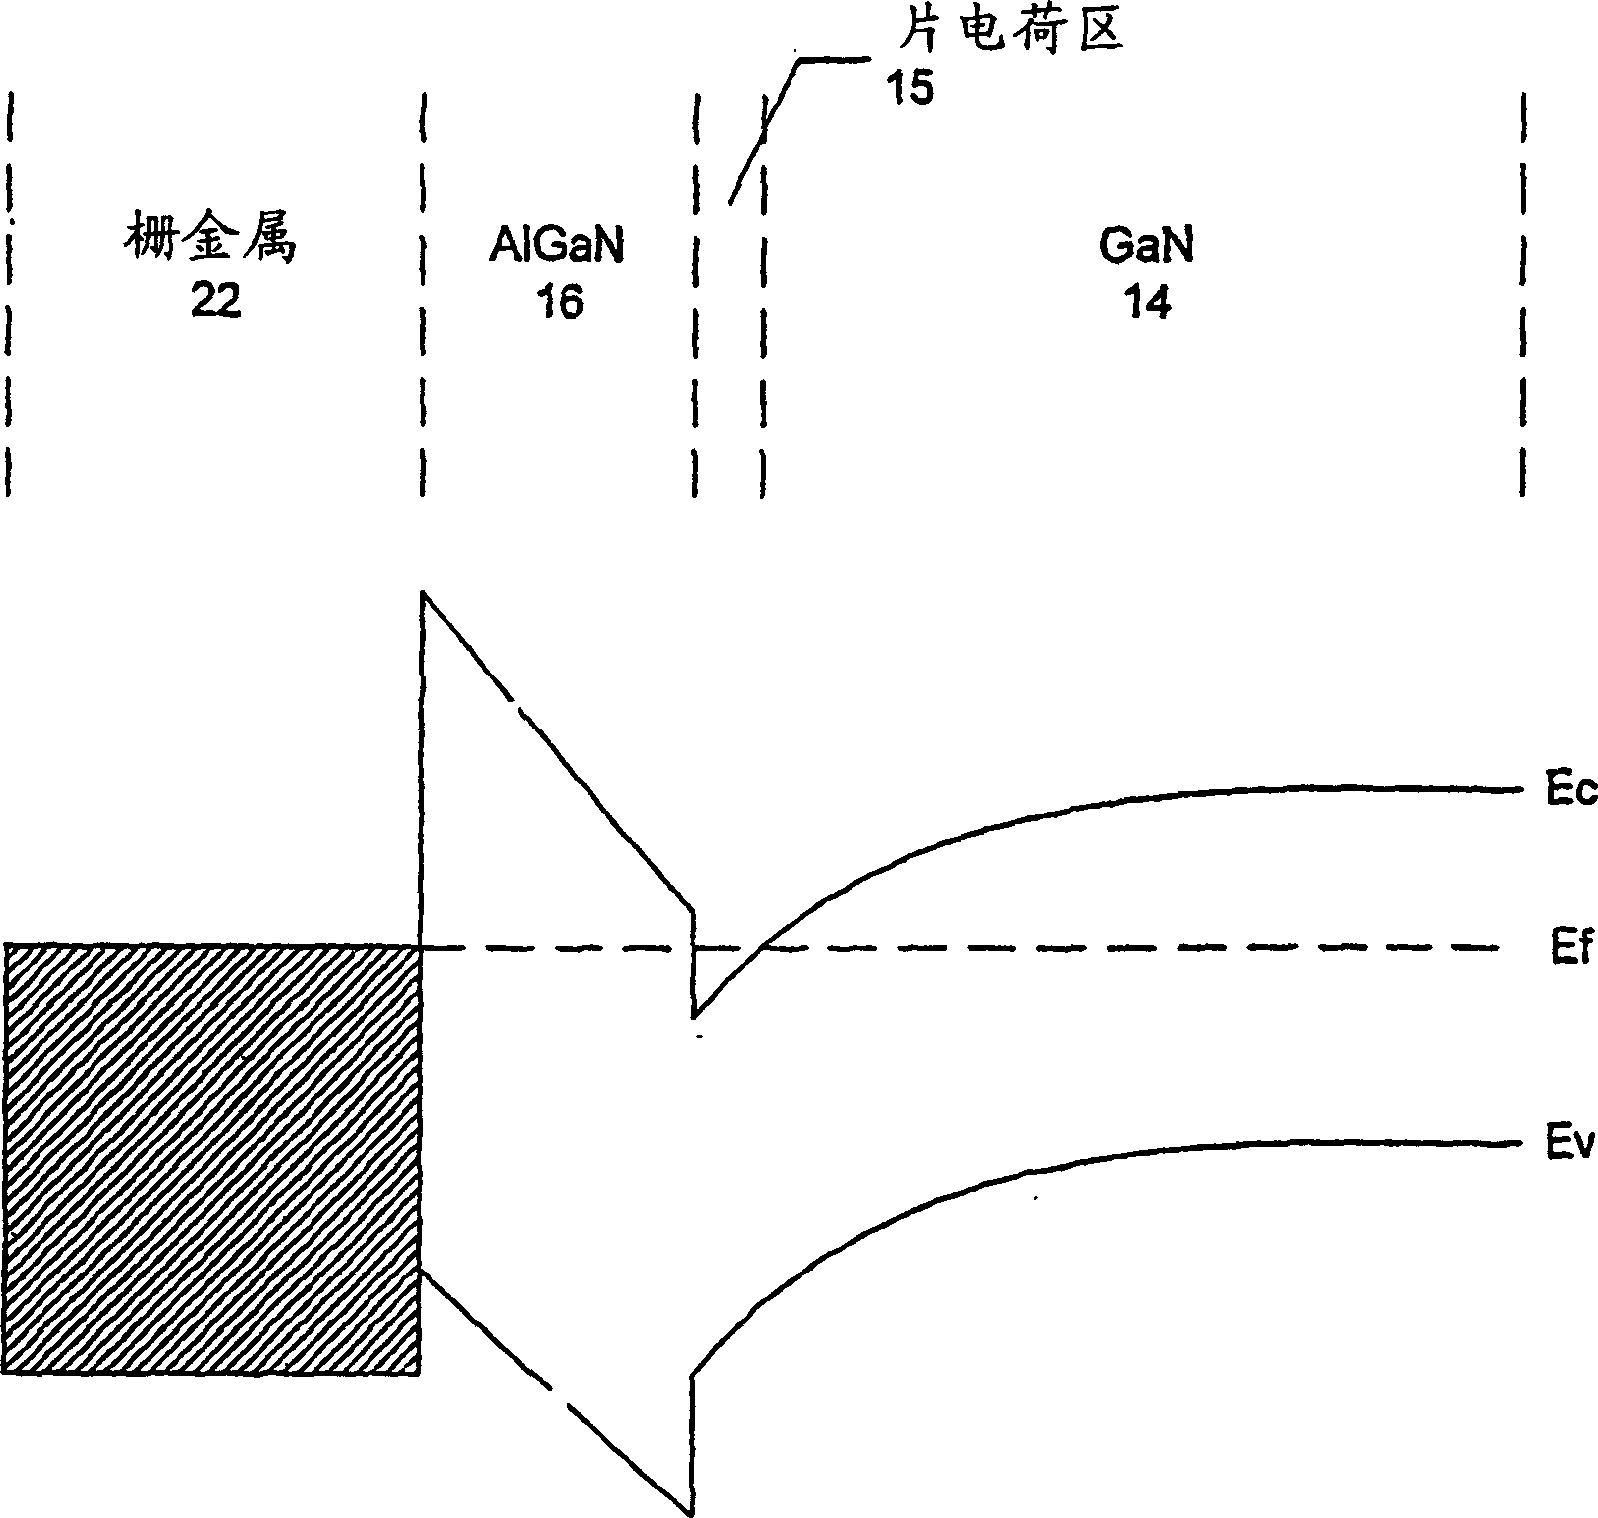 Aluminum gallium nitride/gallium nitride high electron mobility transistors having a gate contact on a gallium nitride based cap segment and methods of fabricating same